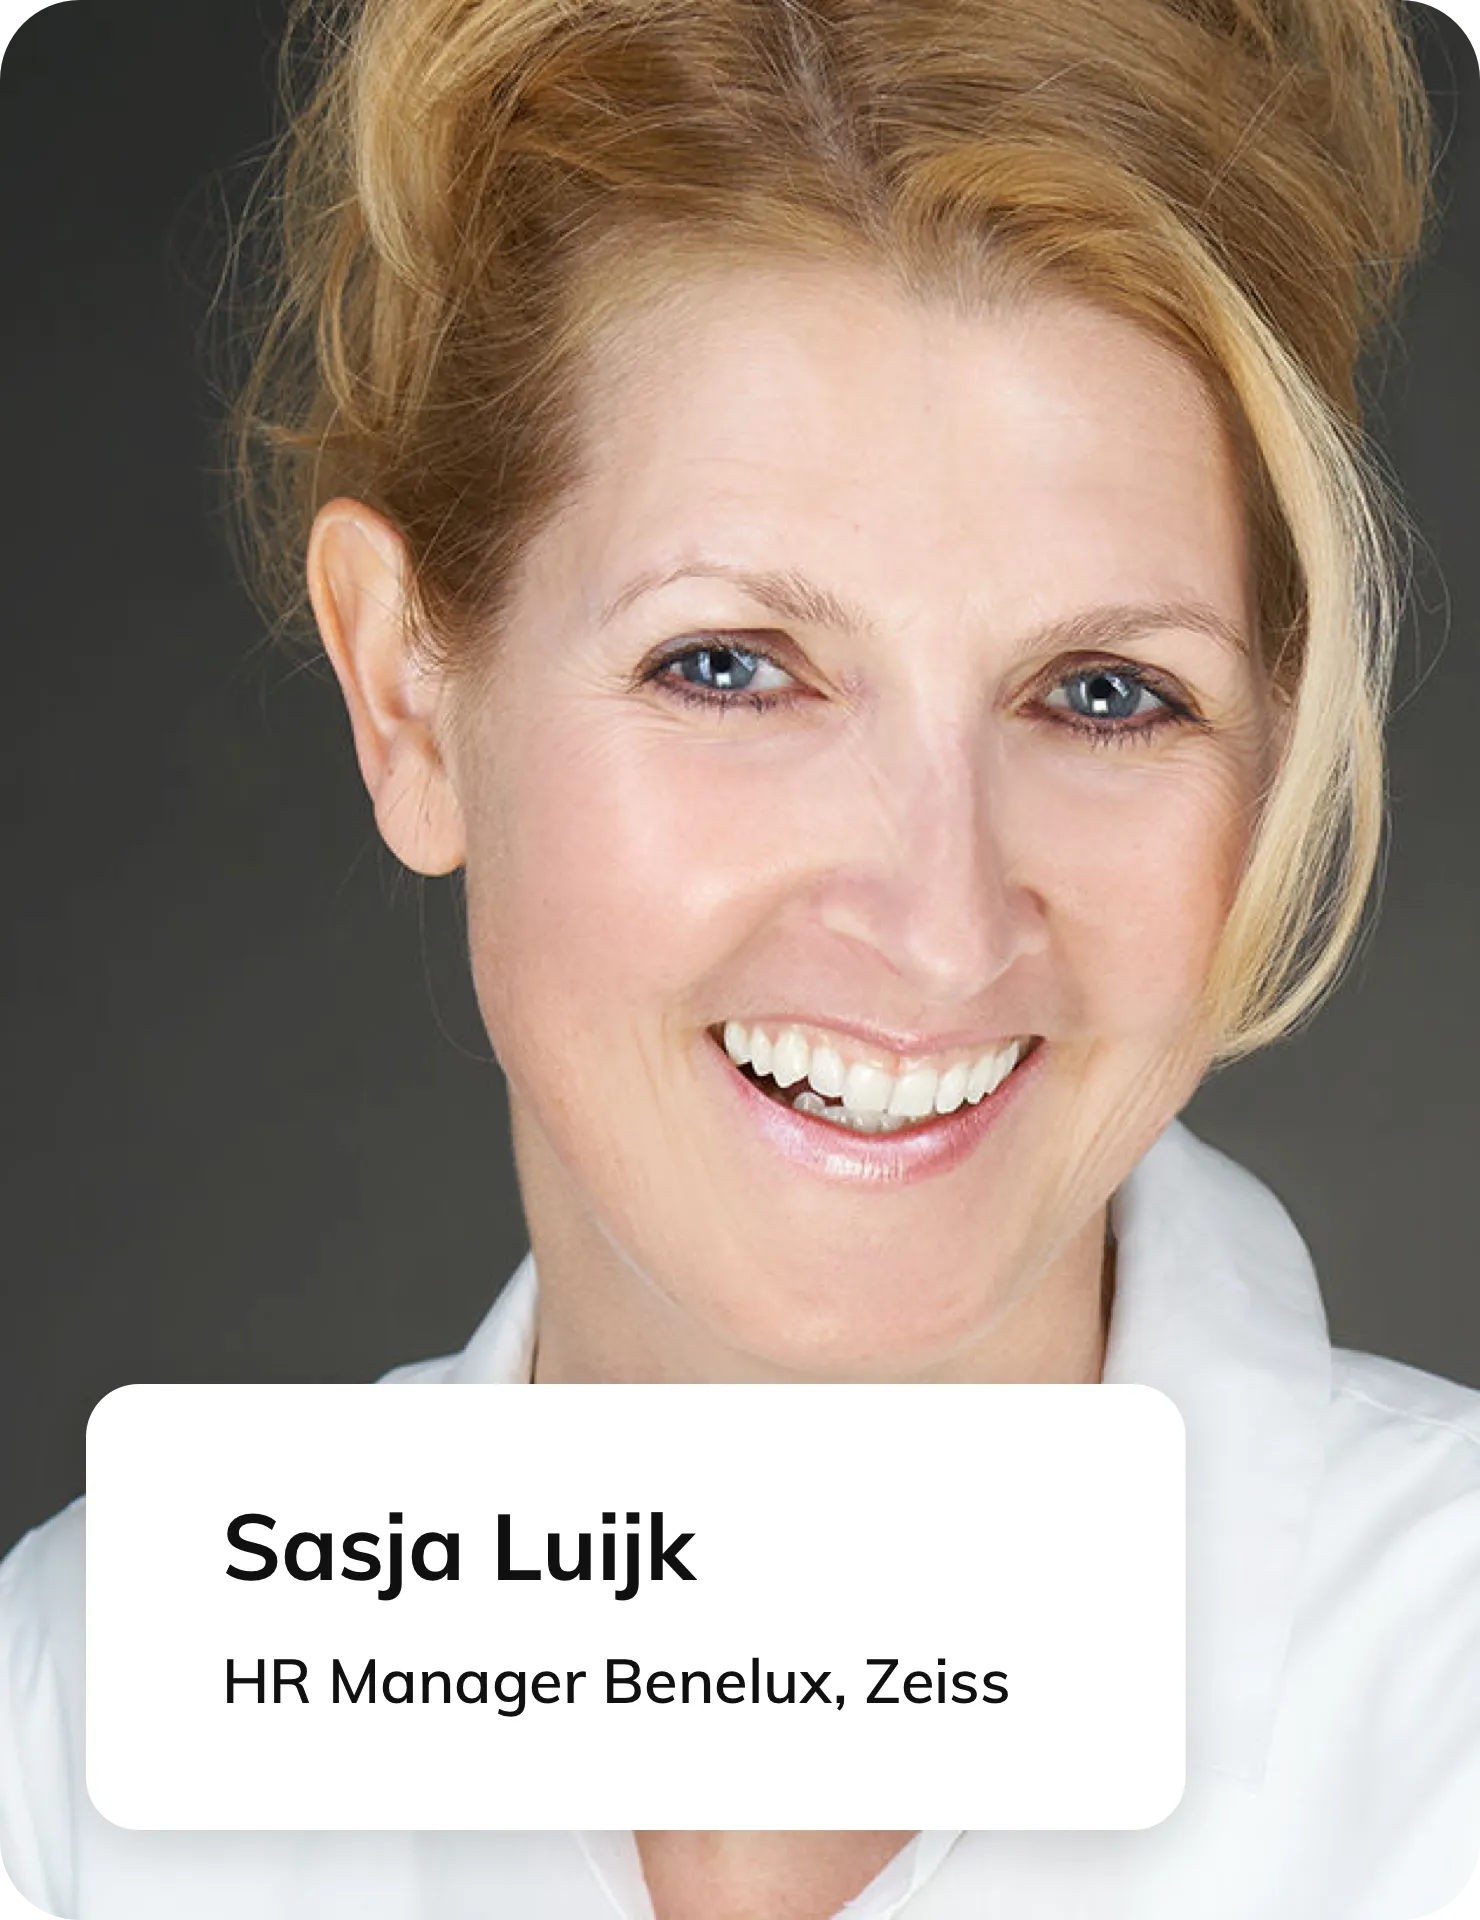 HR Manager Sasja Luijk at Zeiss